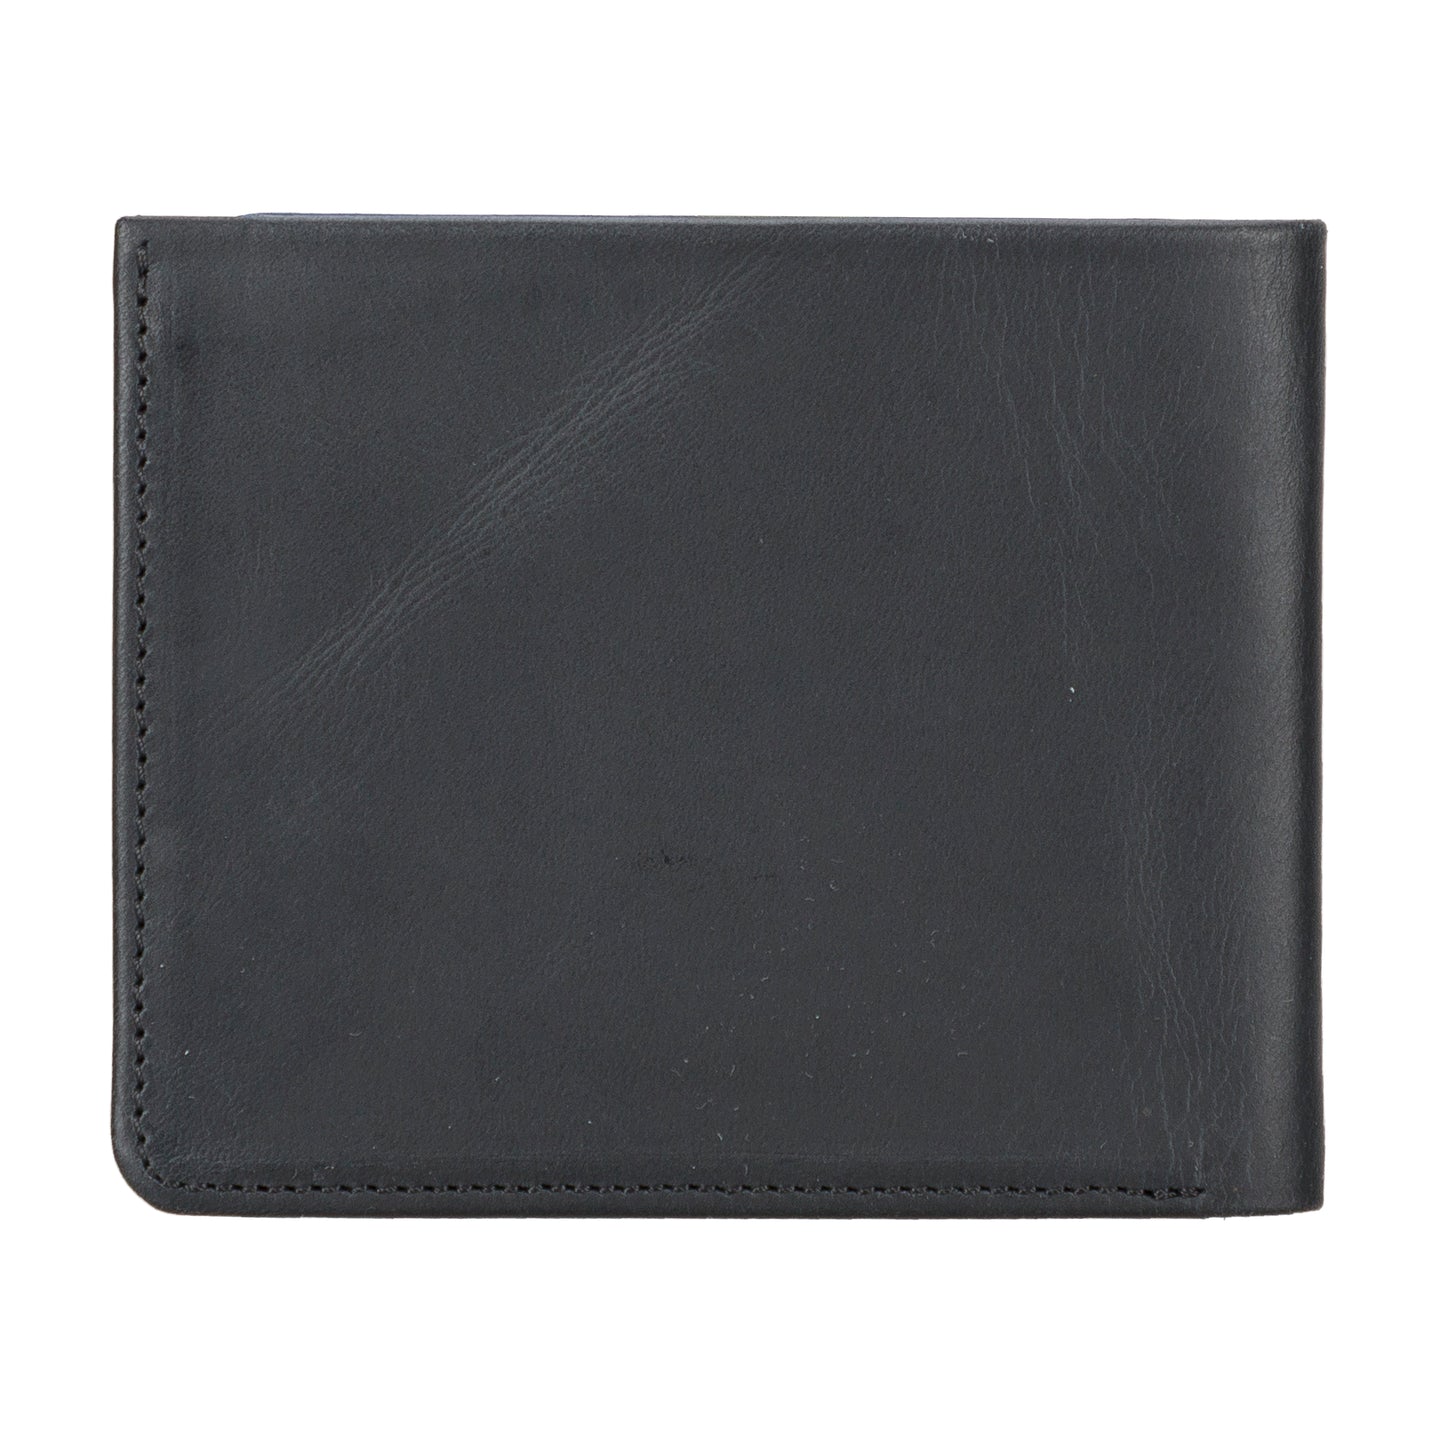 UST Leather Men Wallet - Rustic Black